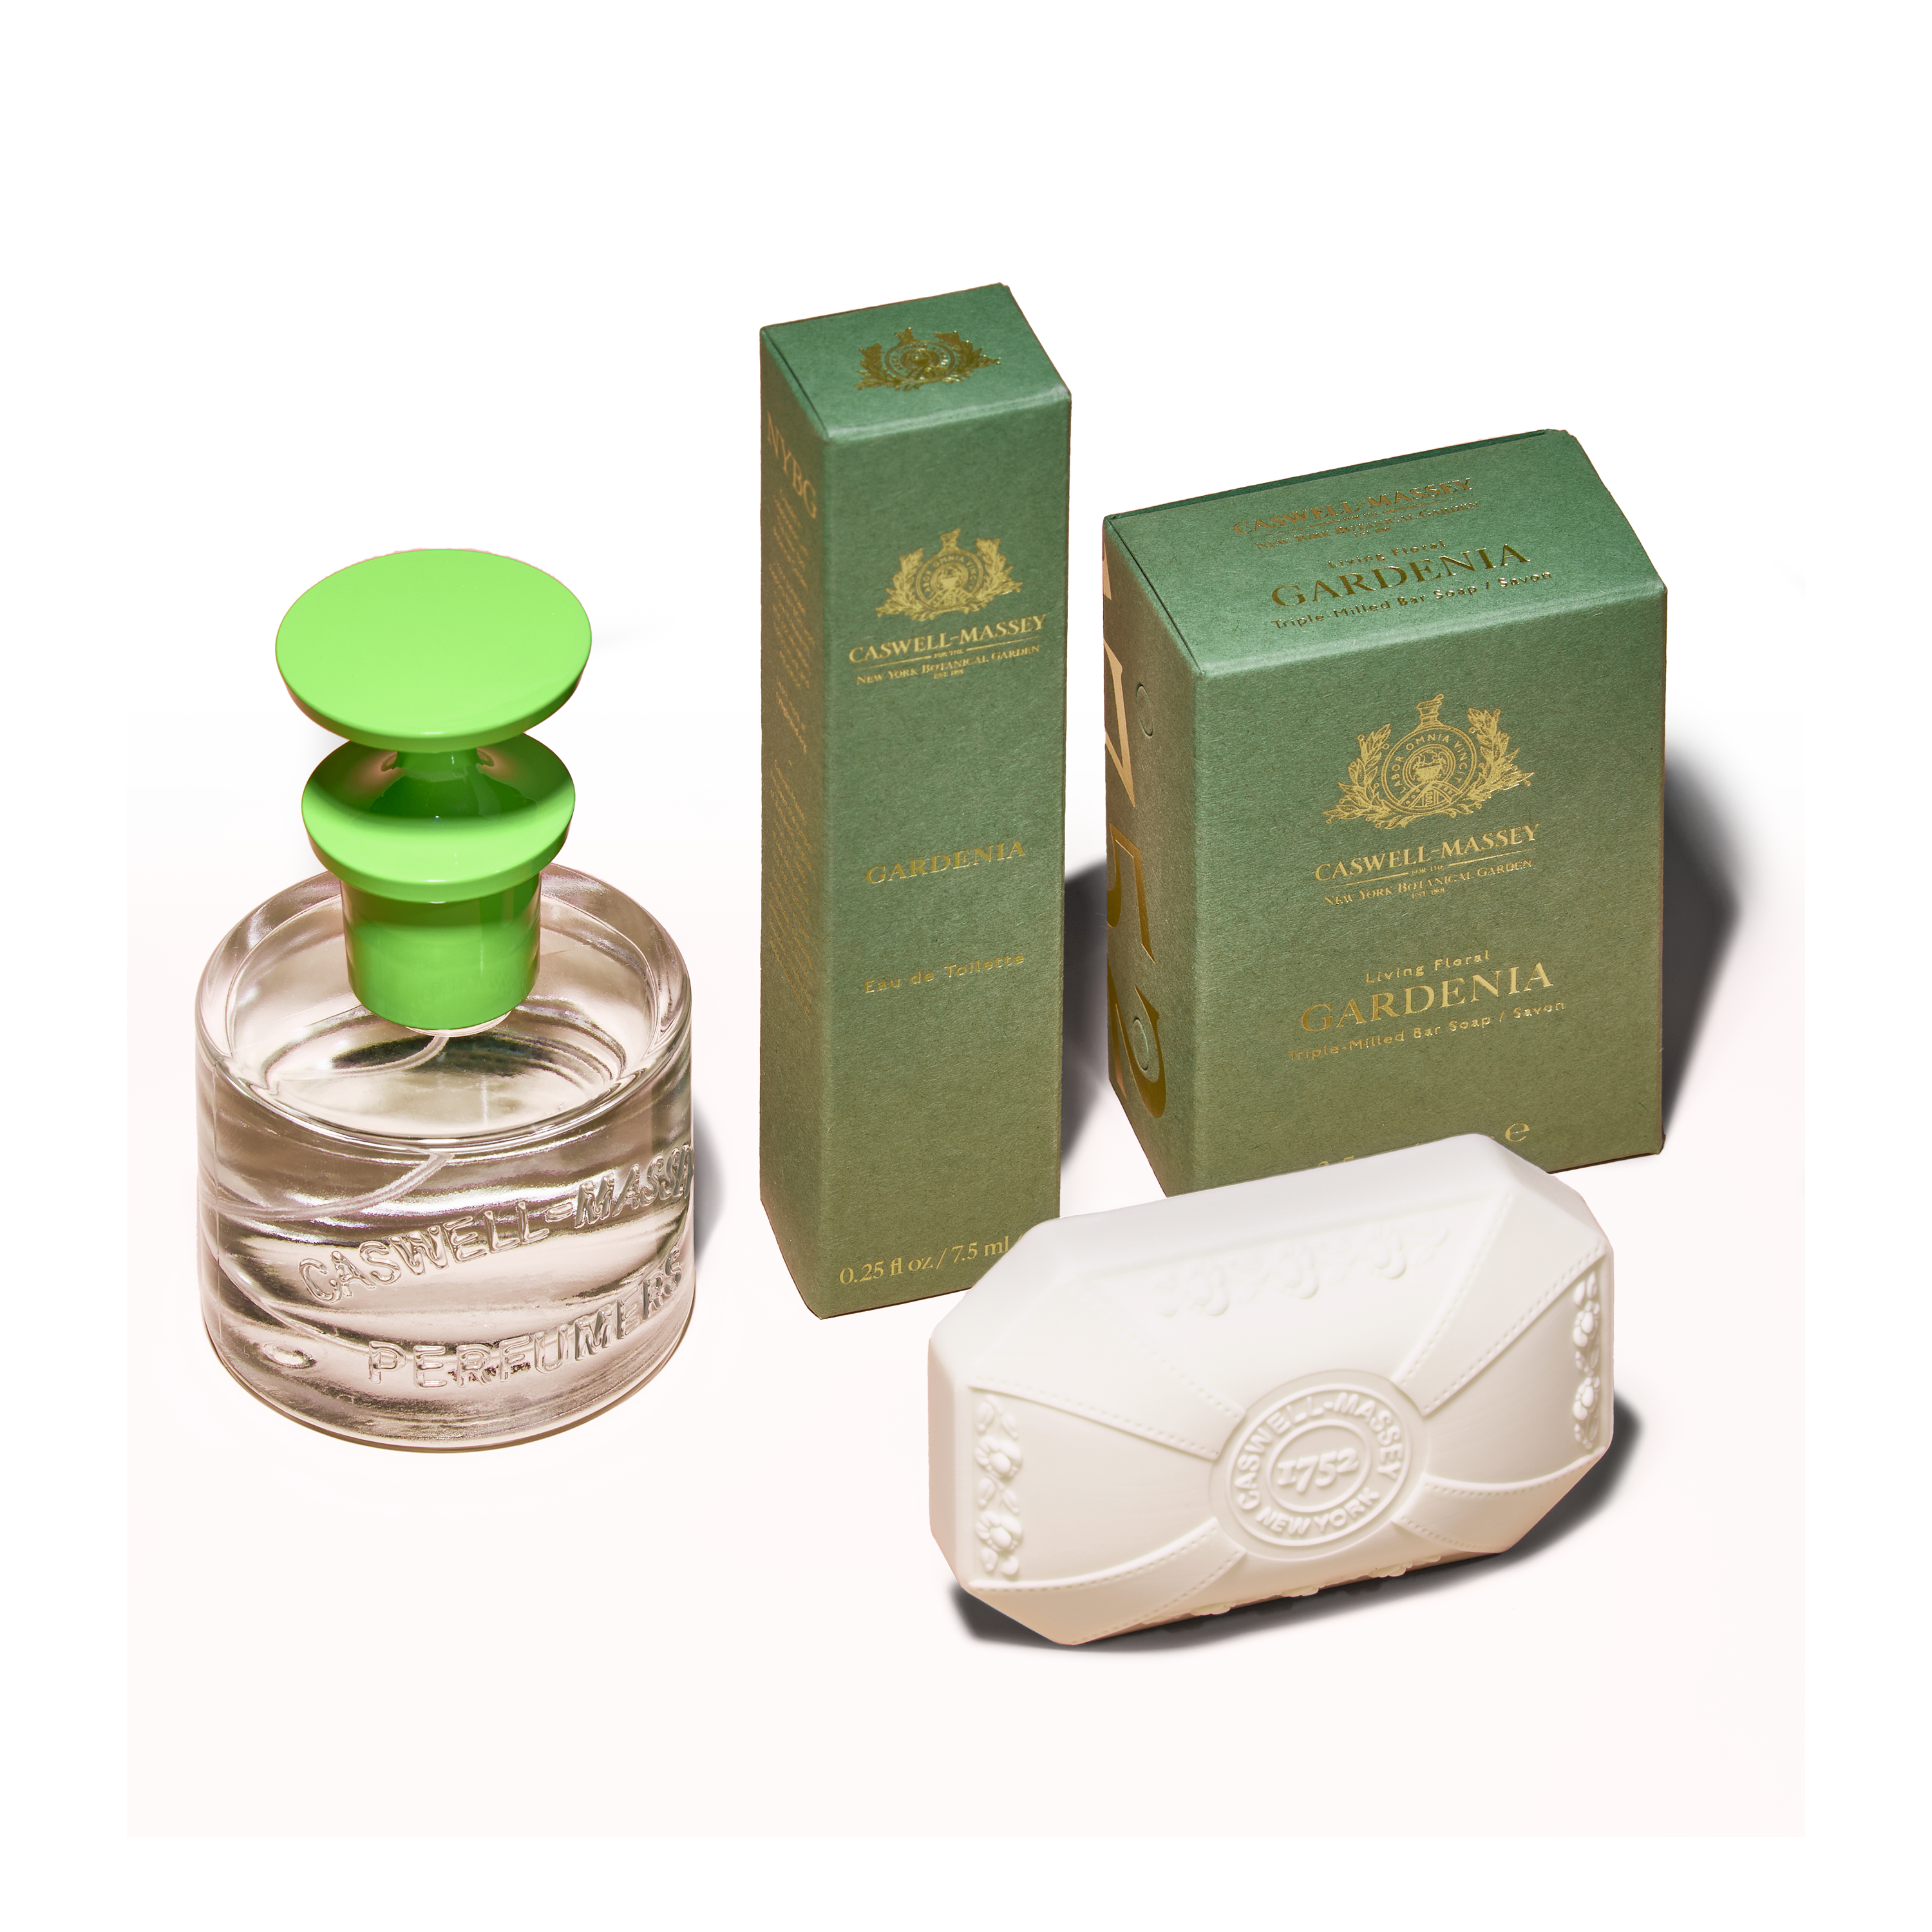 Caswell-Massey Gardenia Eau de Toilette for Women showing full-size 60ml, travel-size 7.5ml, and Gardenia Bath Soap